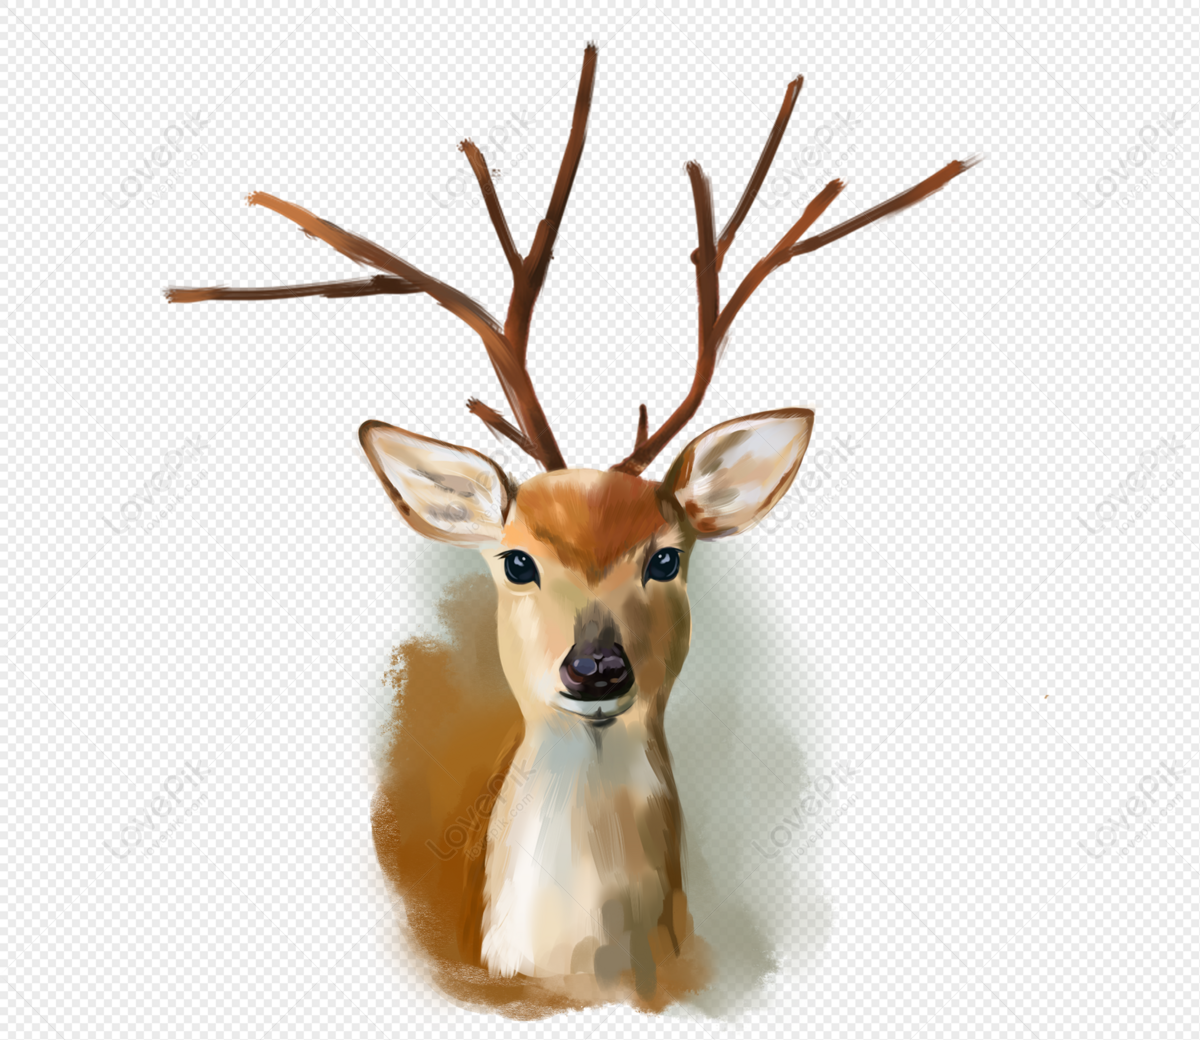 Cute cartoon deer. Vector illustration of a cute cartoon deer.::  tasmeemME.com